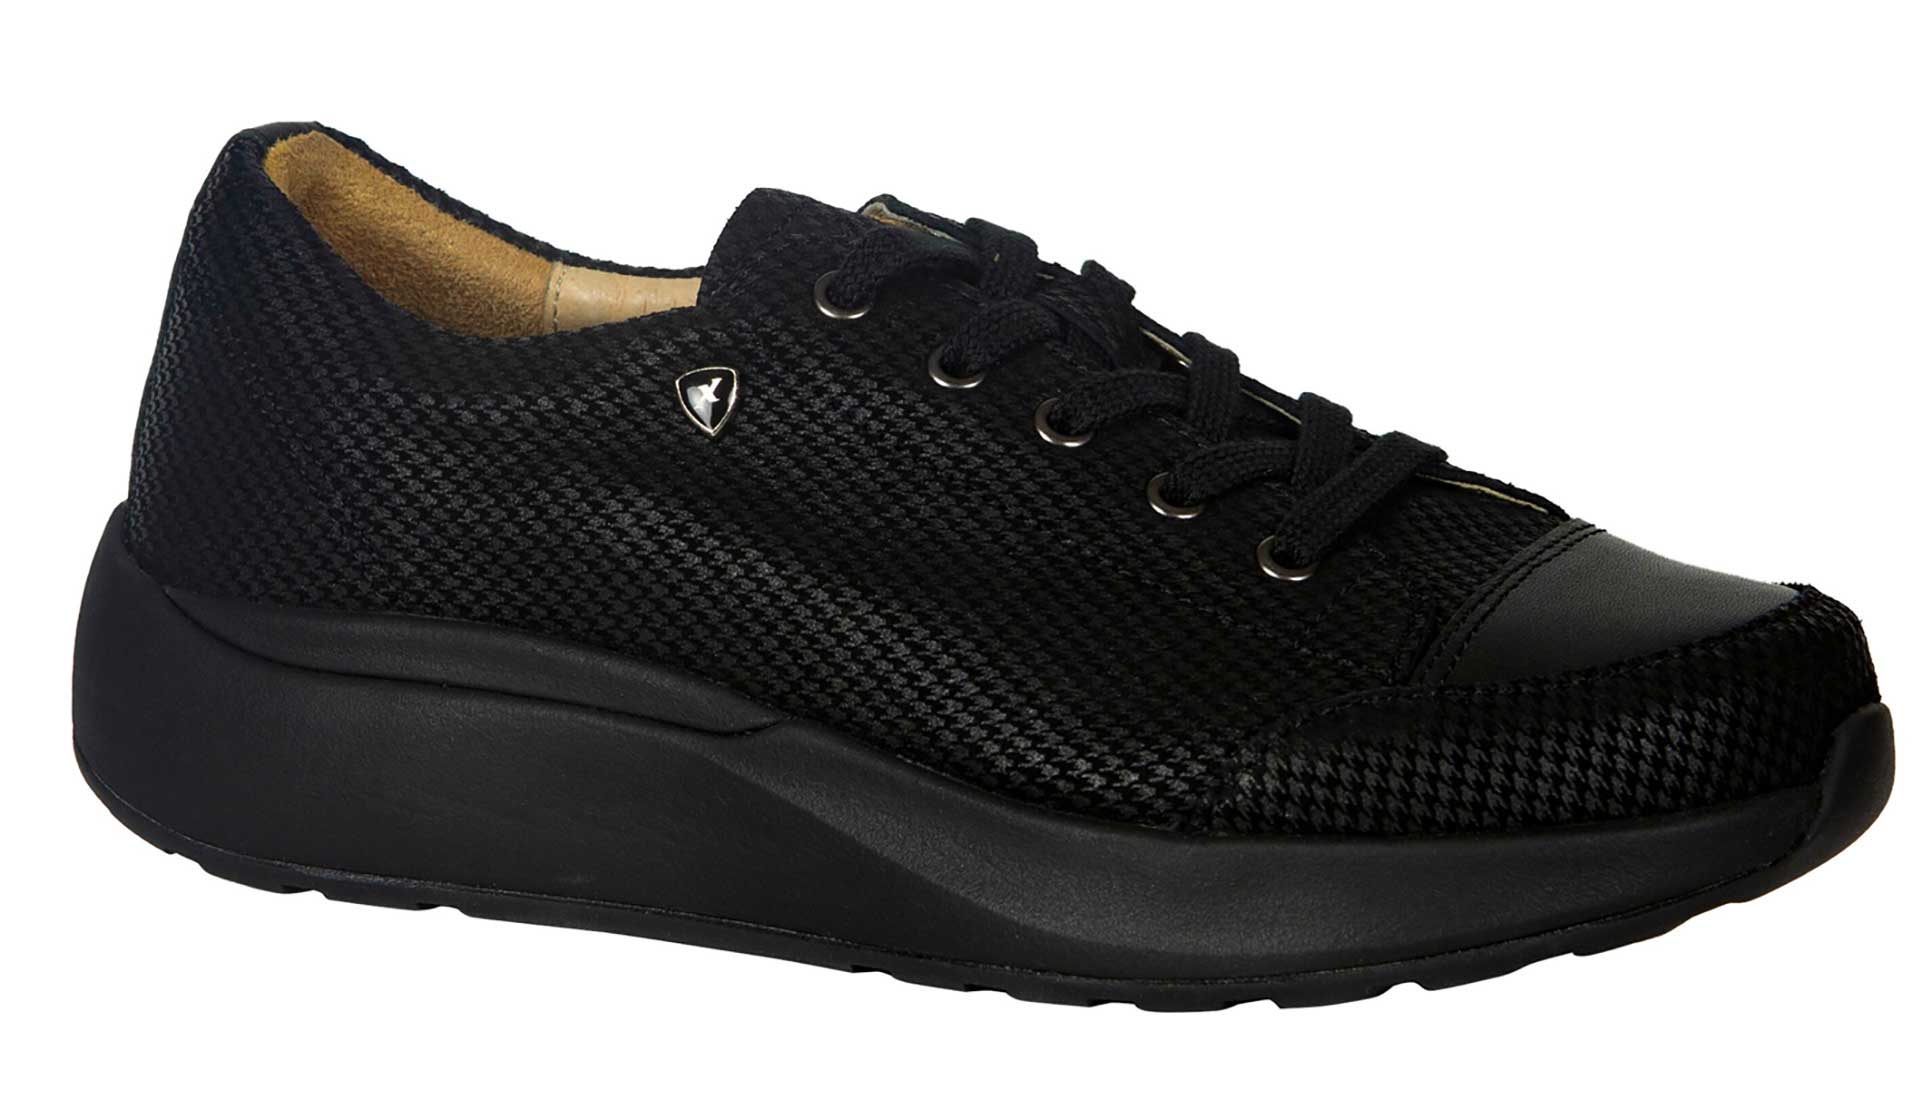 Xelero Shoes Heidi X22216 - Women's Comfort Therapeutic Shoe - Casual & Walking Shoe - Medium - Wide - Extra Depth For Orthotics